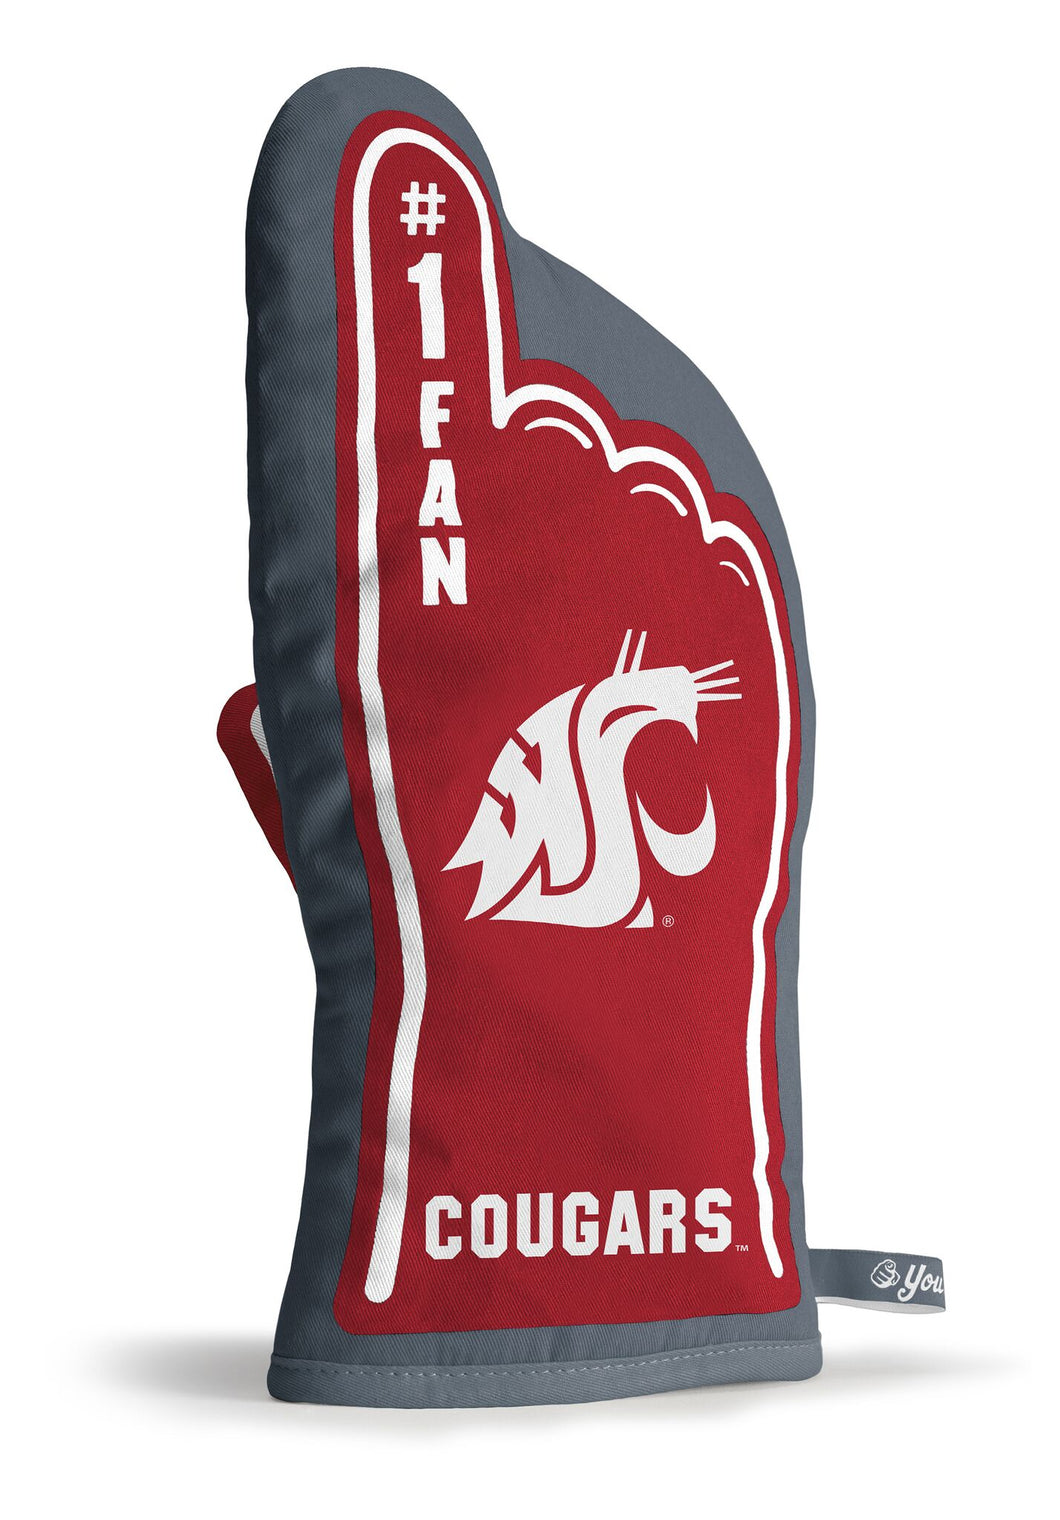 Washington State Cougars #1 Fan Oven Mitt